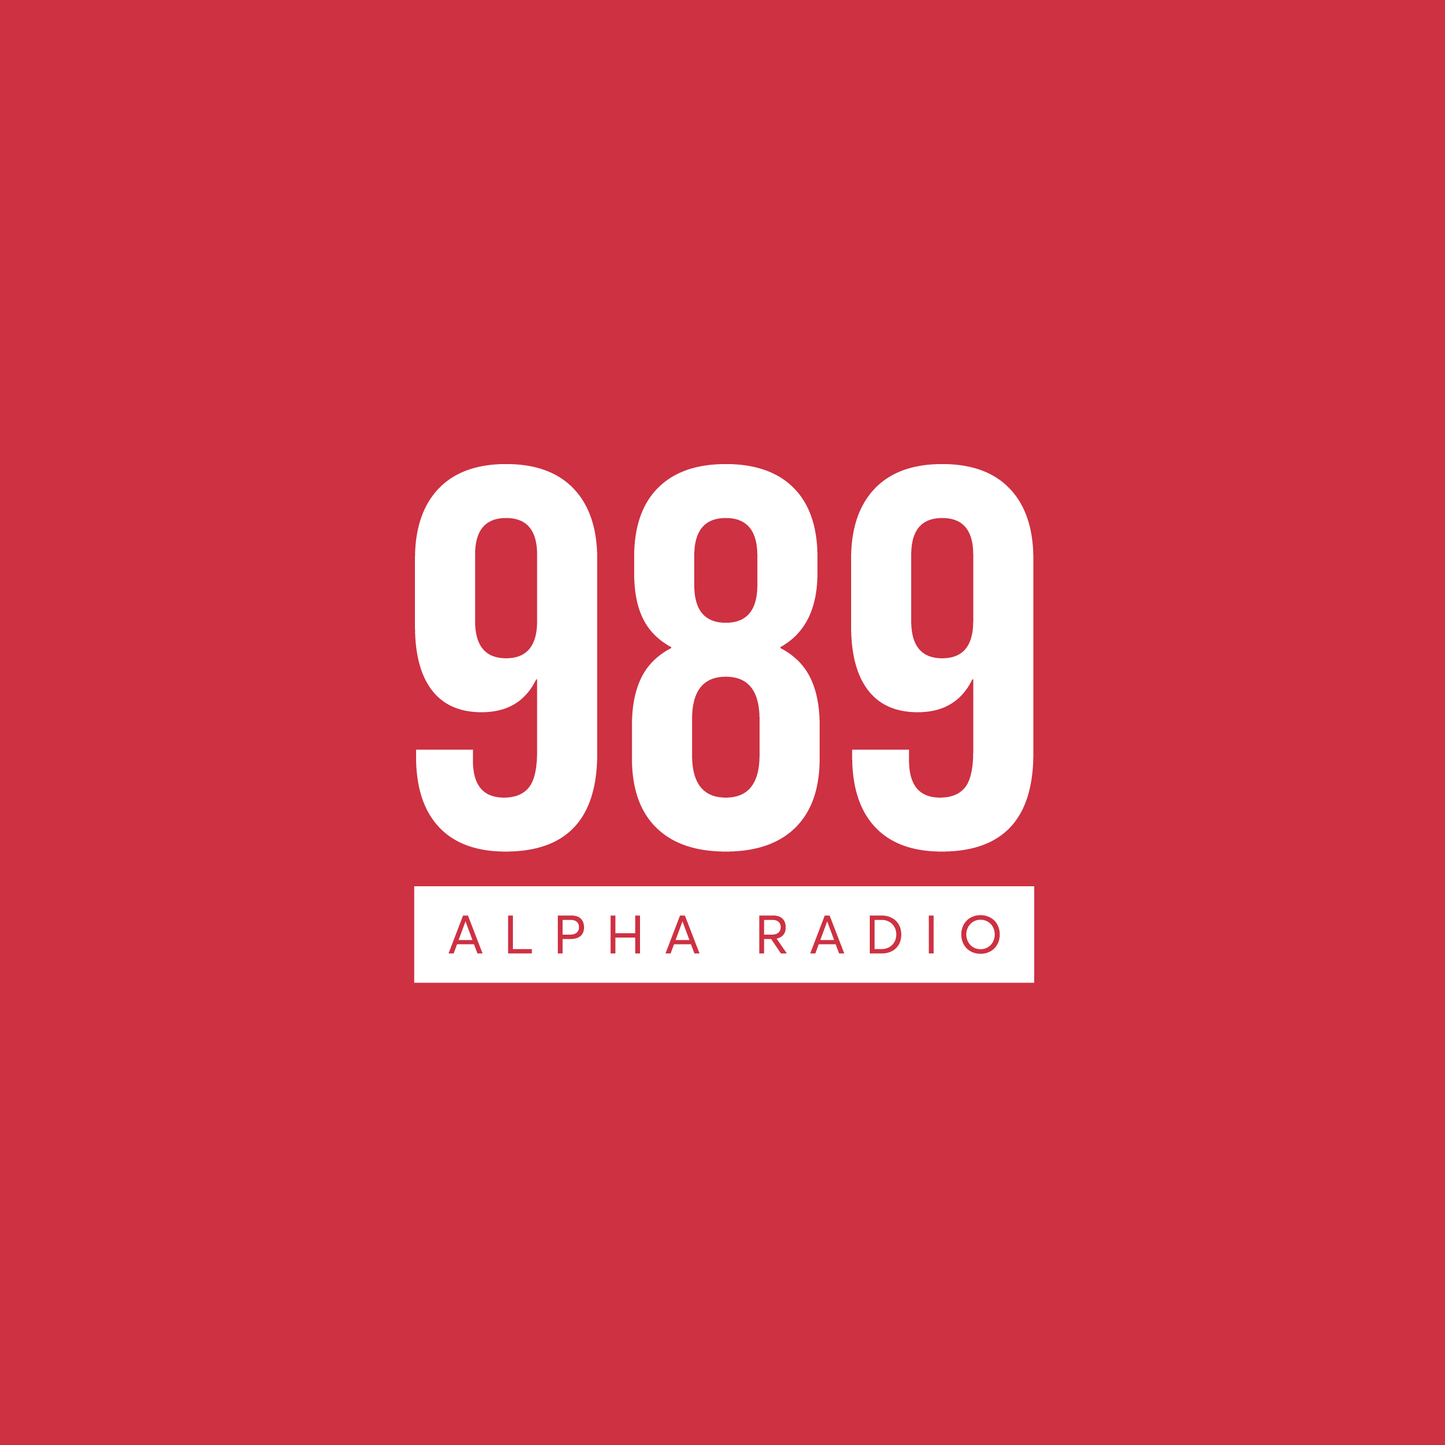 eco Auto Hipócrita Escuchar Alpha Radio 989 / Grecia Atenas 98.9 FM - online, playlist